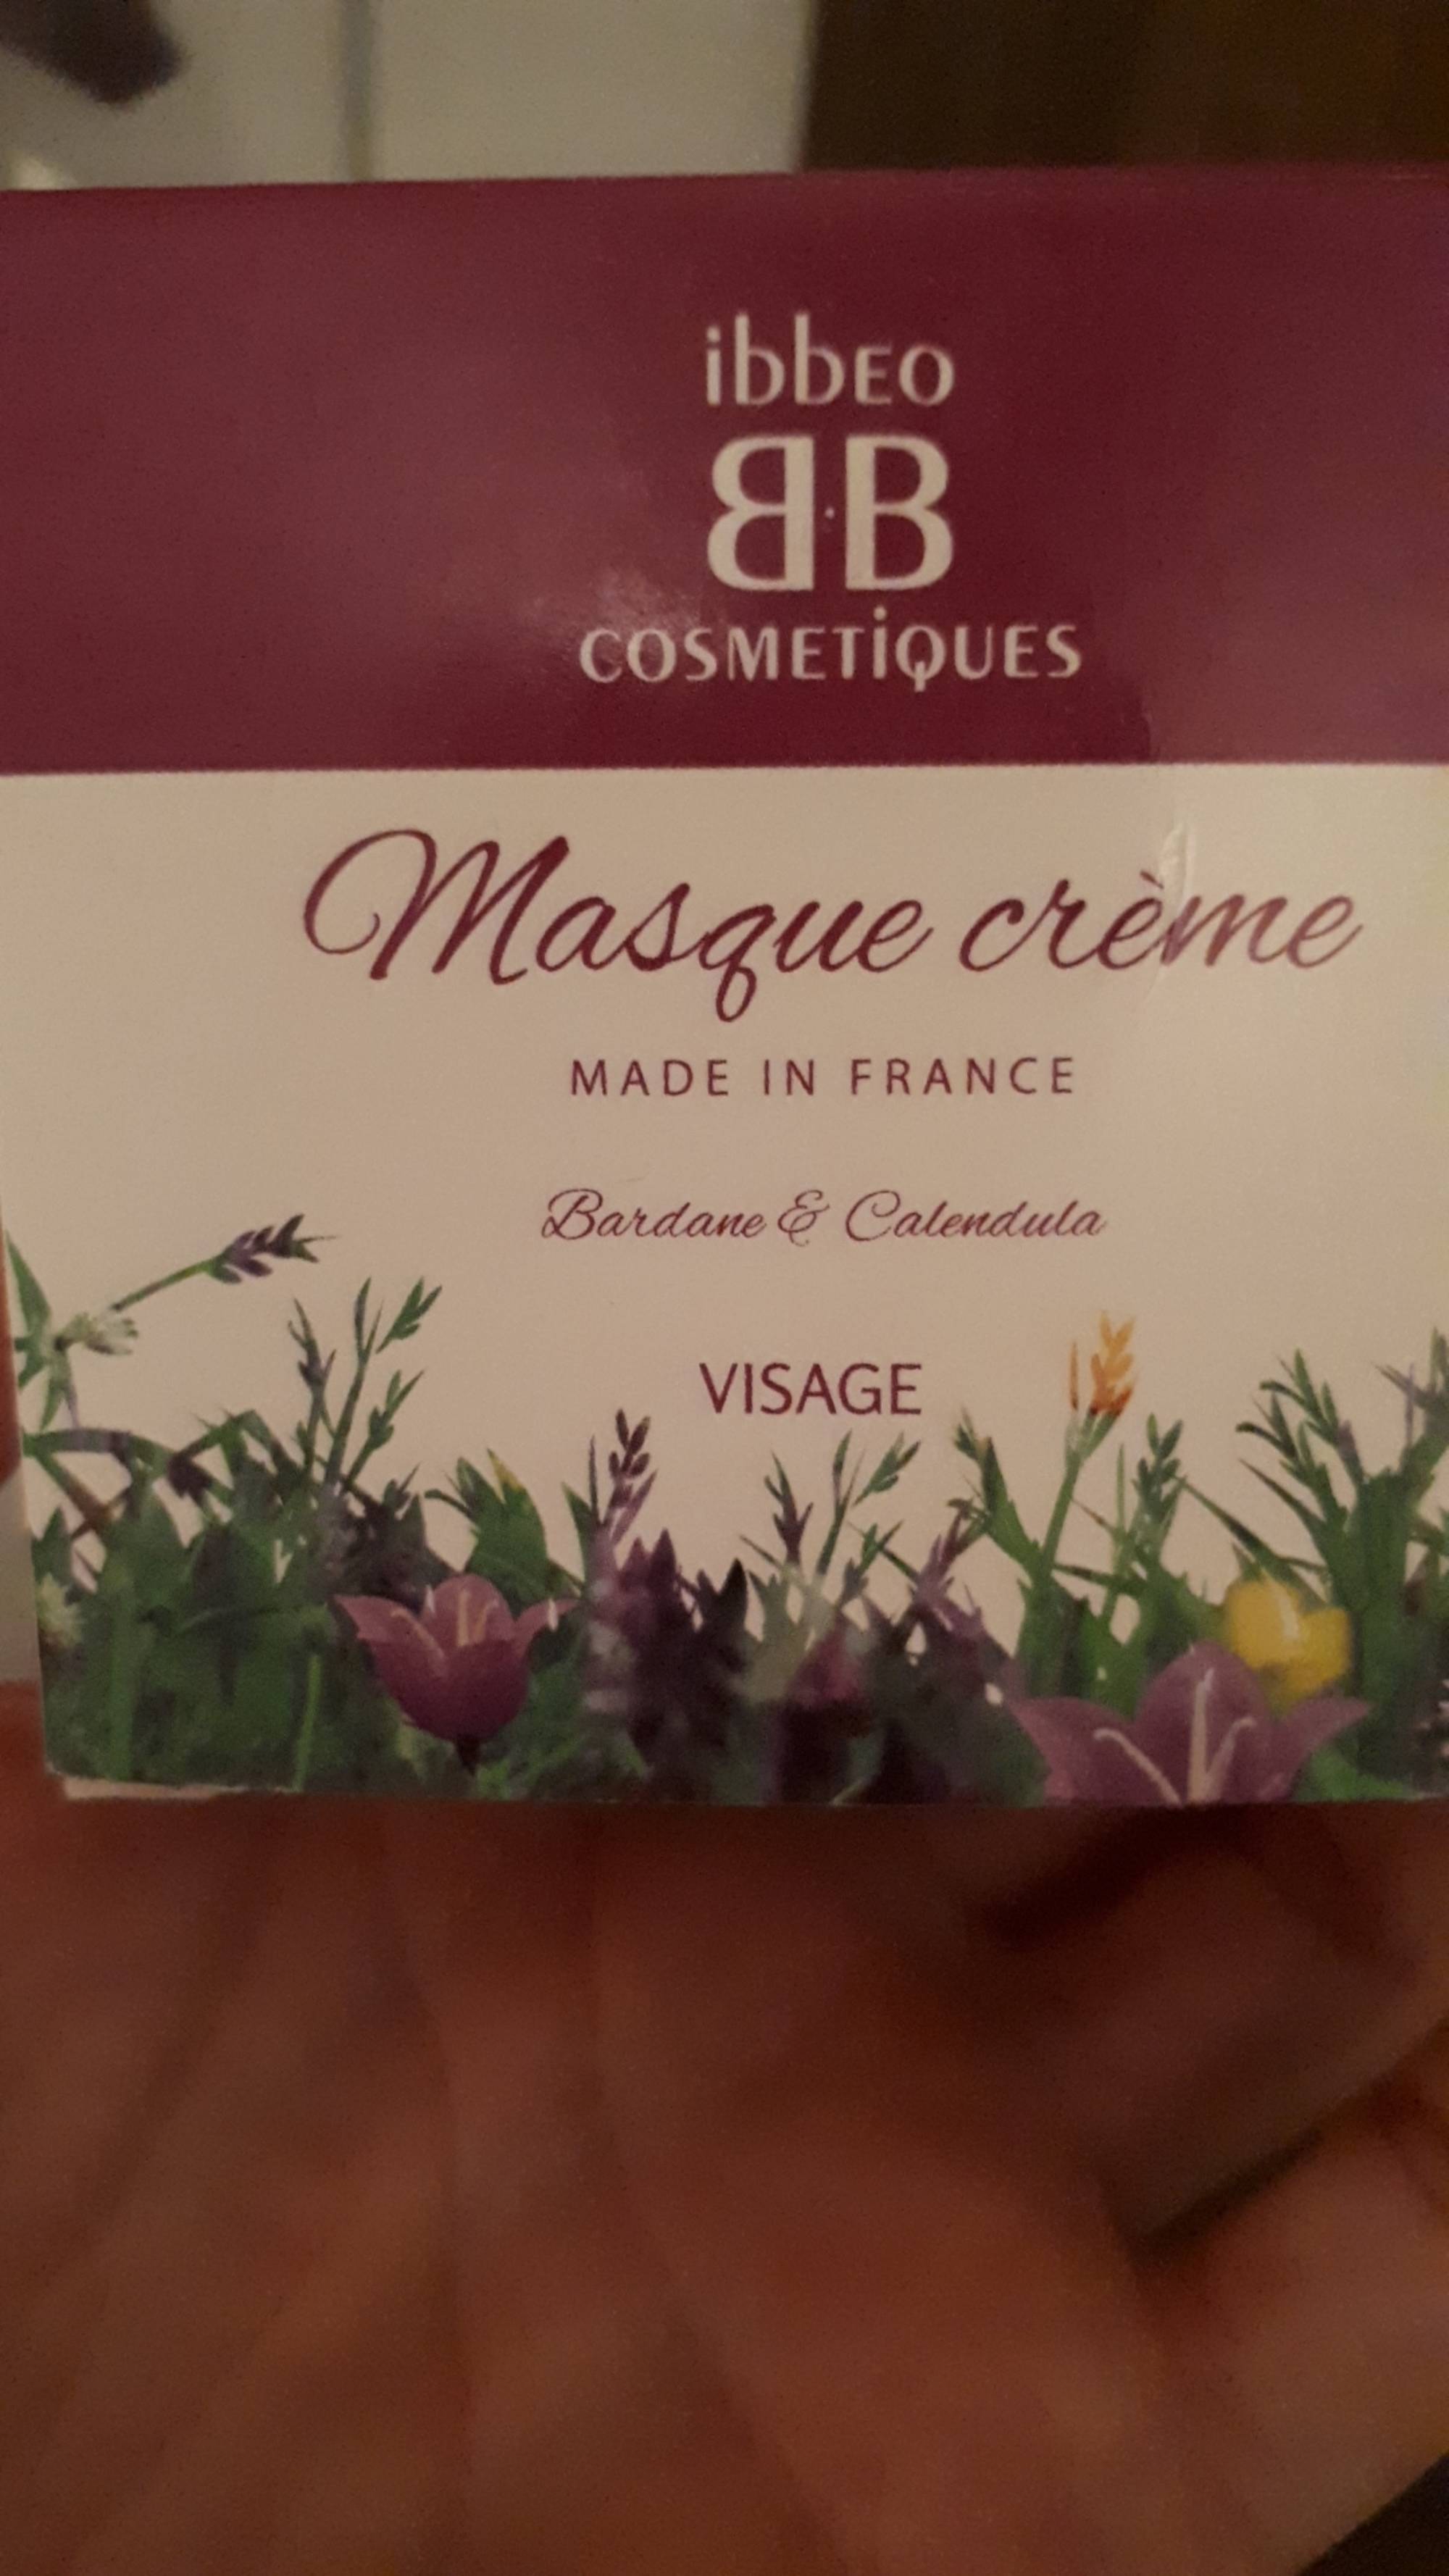 IBBEO COSMÉTIQUES - Bardane & calendula - Masque crème  